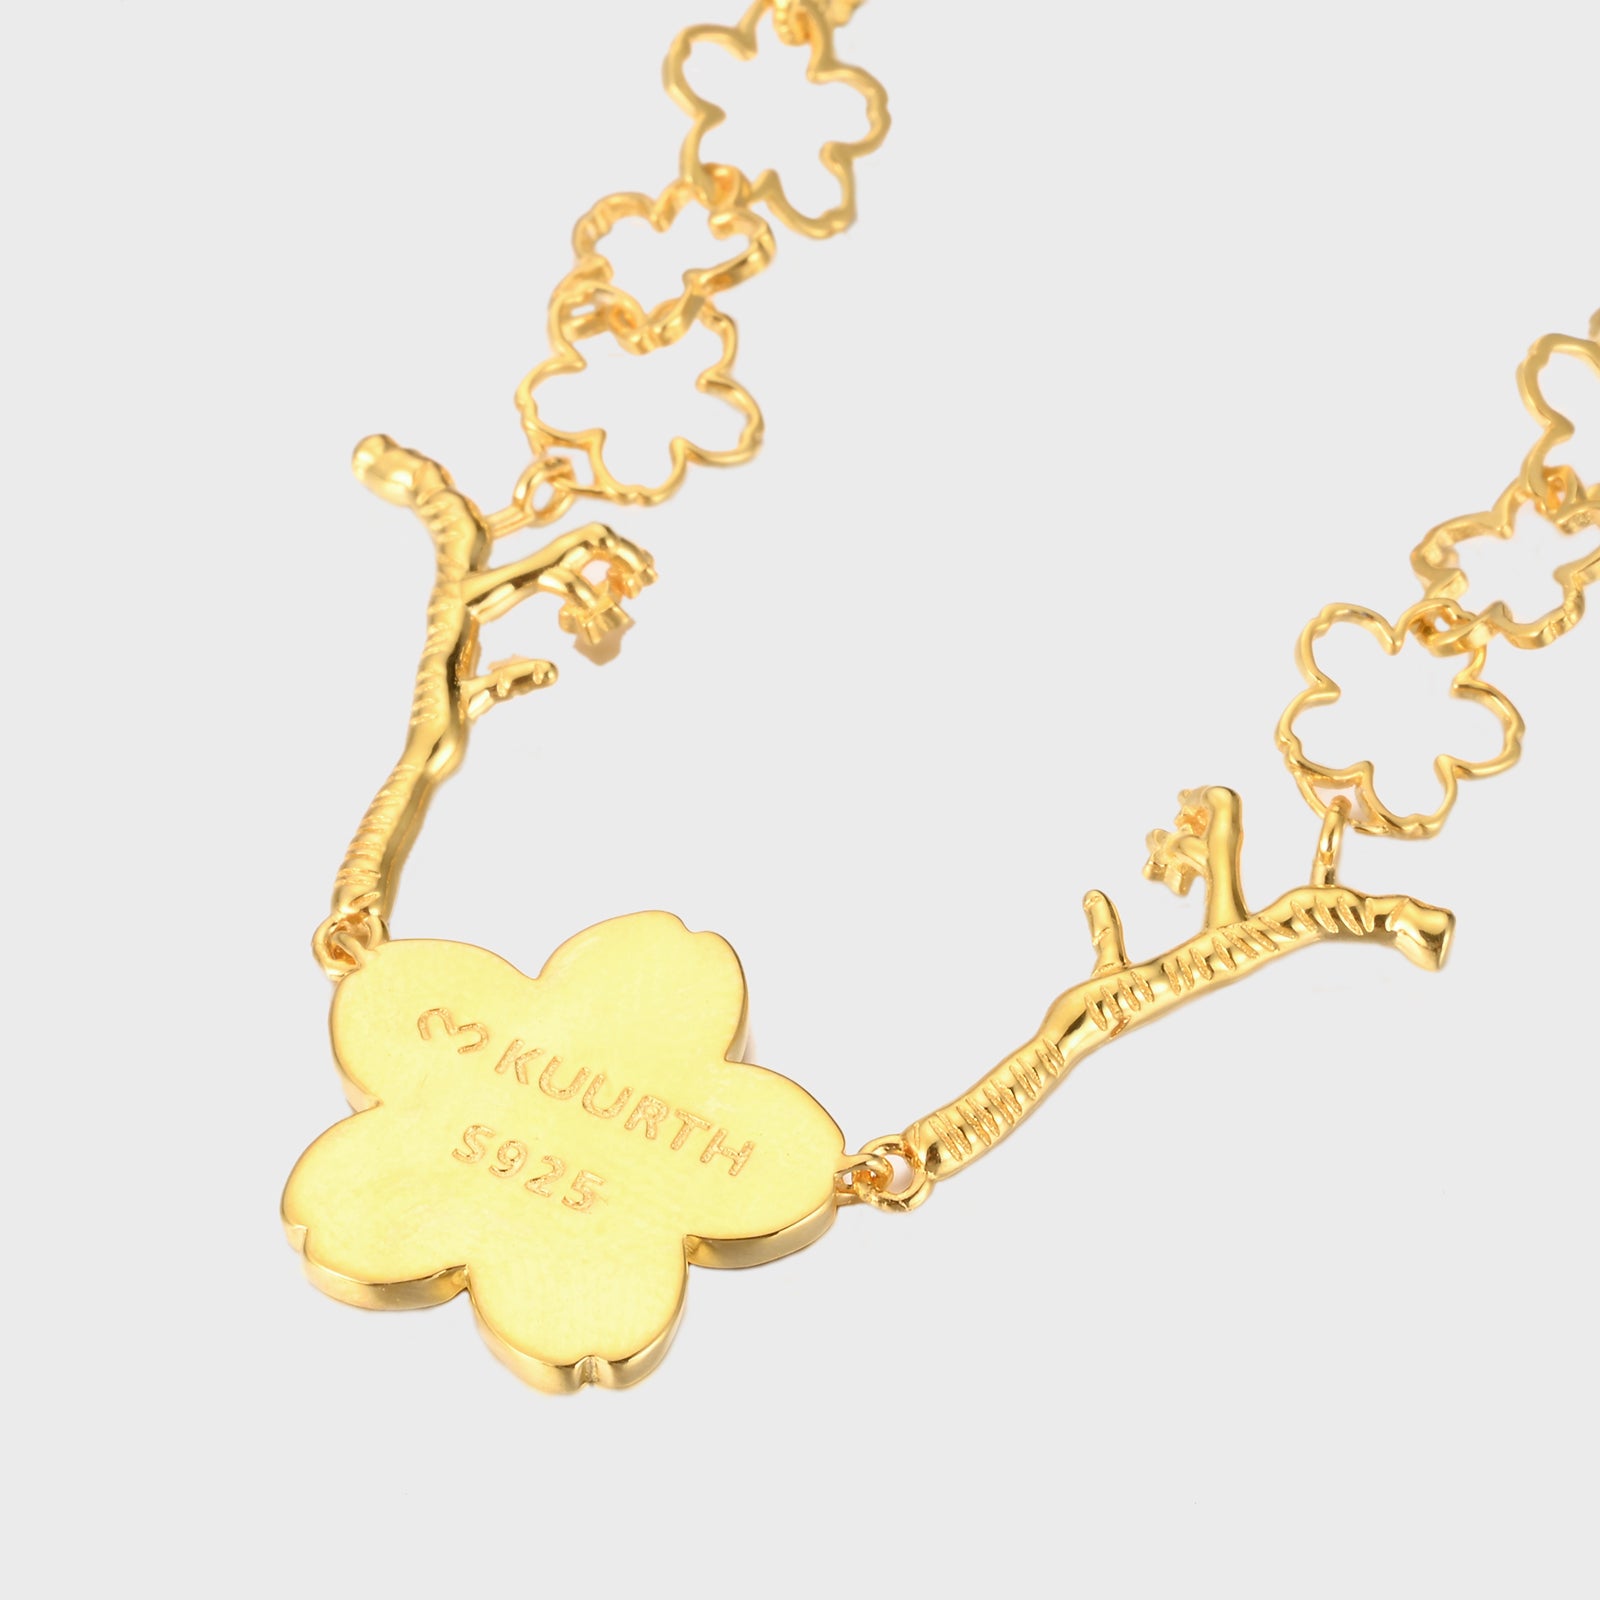 Almond Blossom - Gold Necklace CC